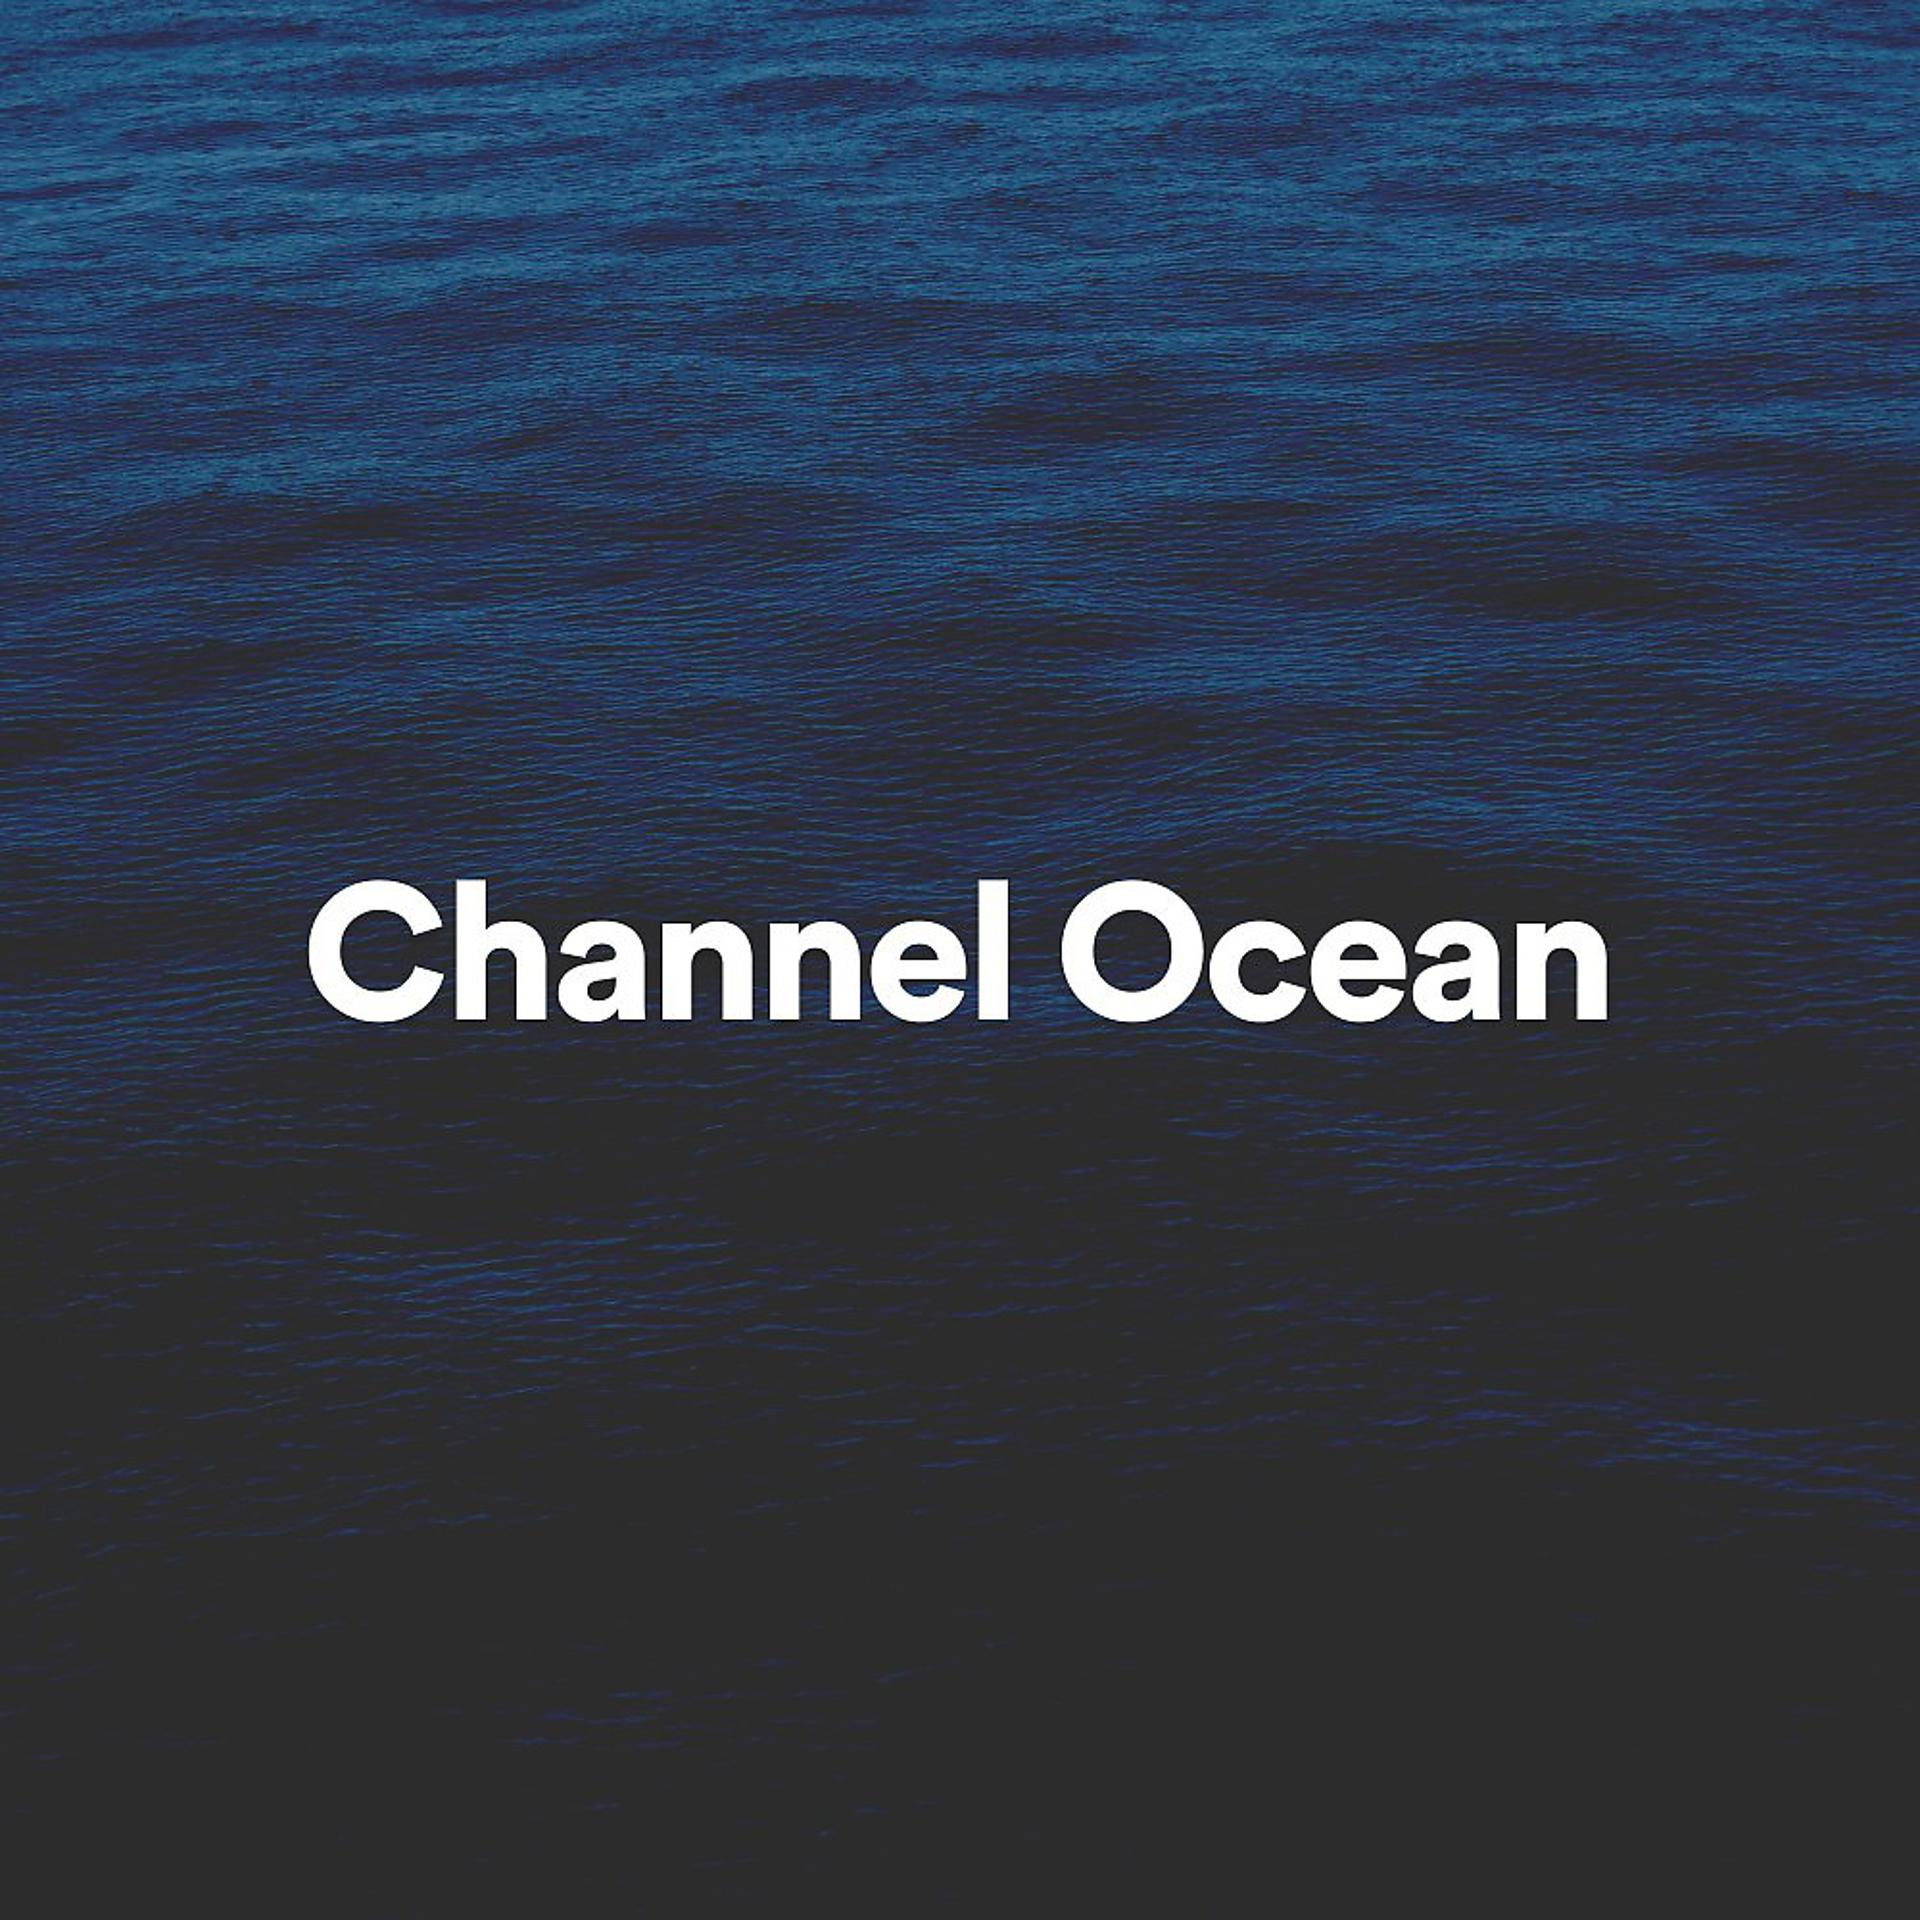 Loud Ocean. Ocean channel